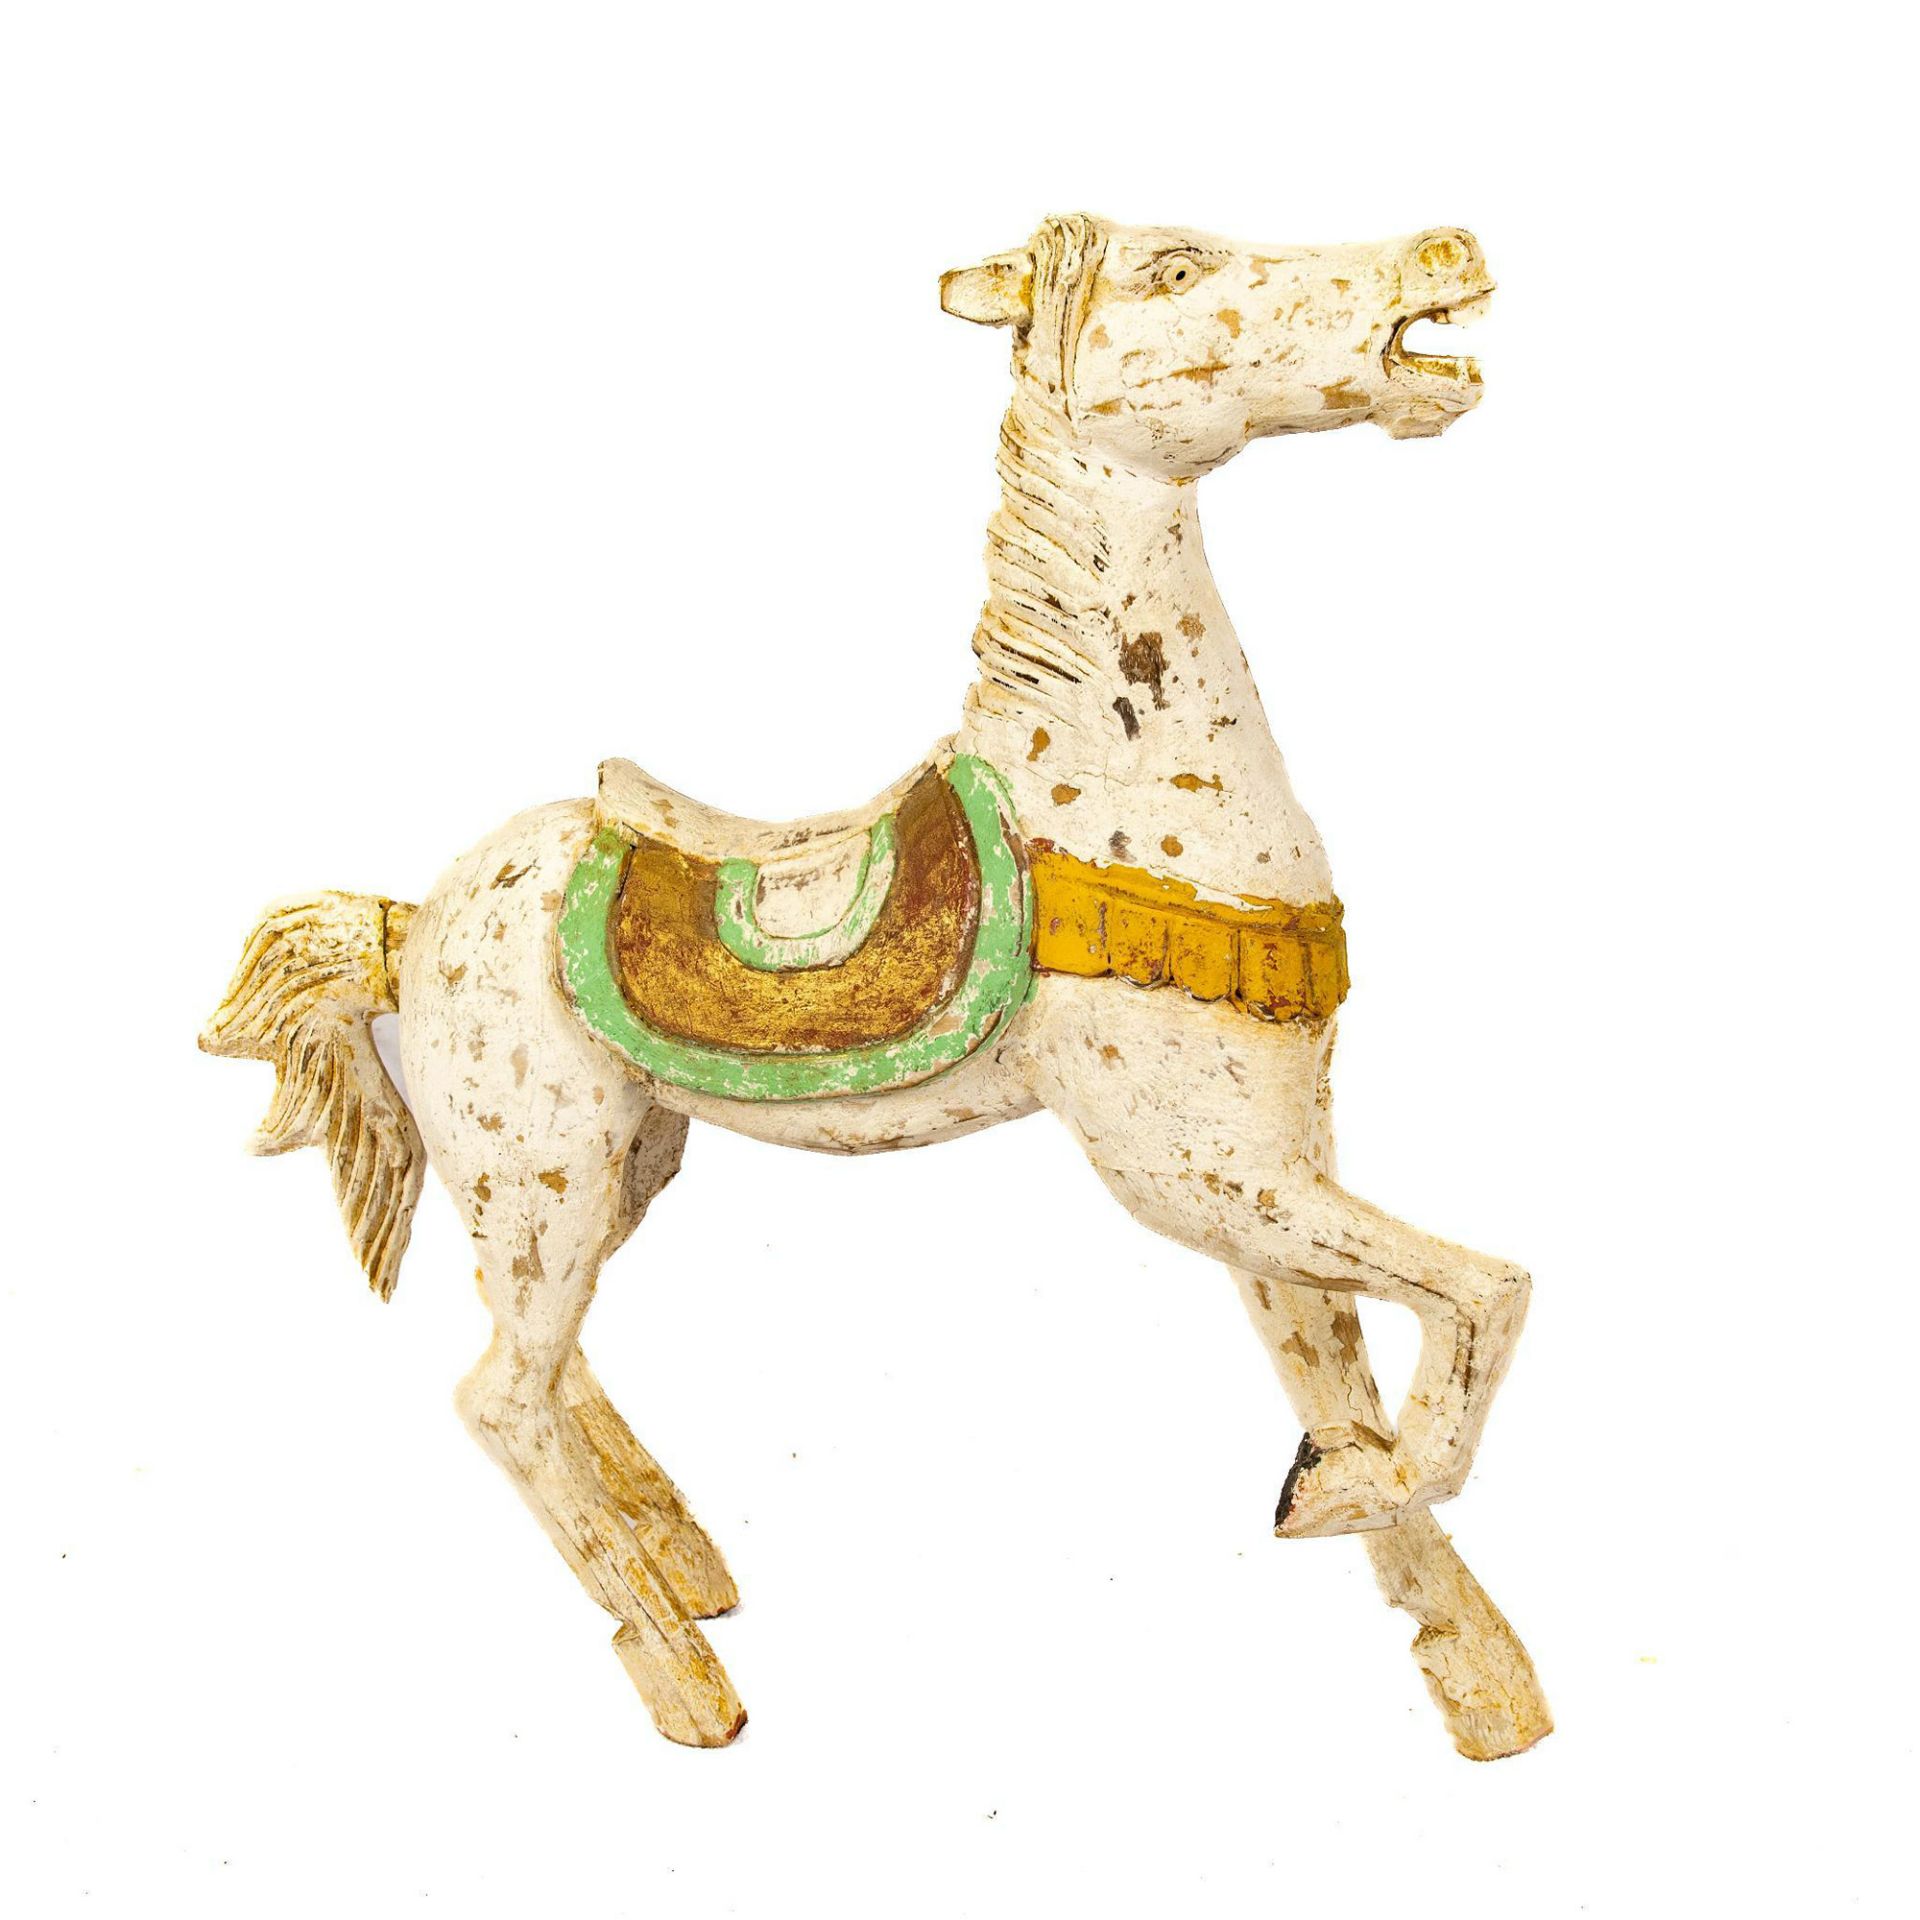 Painted Wood Decorative Horse - Image 2 of 4